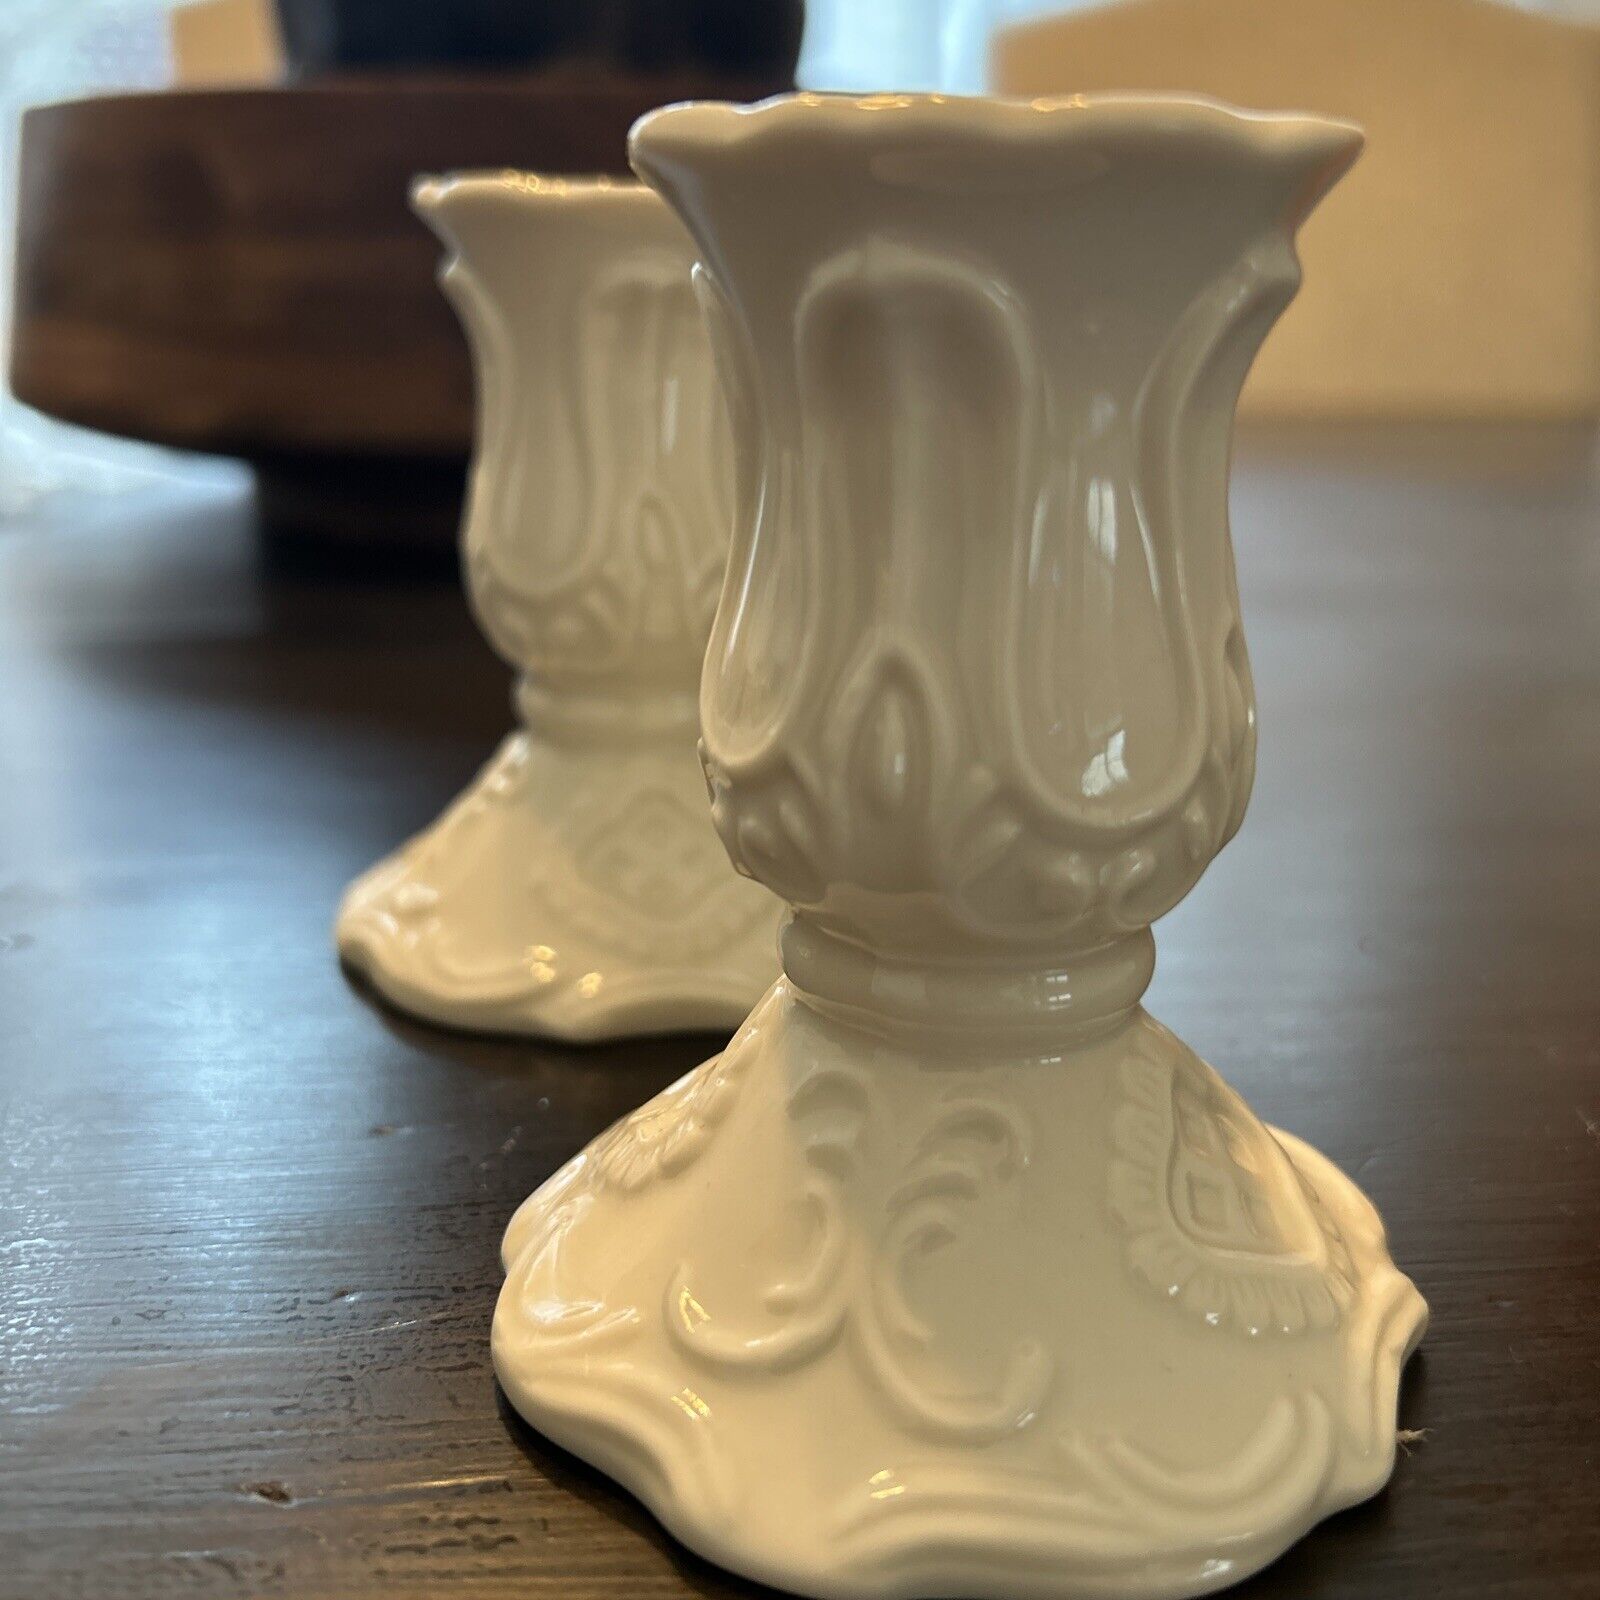 VTG Candlesticks By Oleg Cassini Small Ivory Ceramic - Approx 3 1/2” High